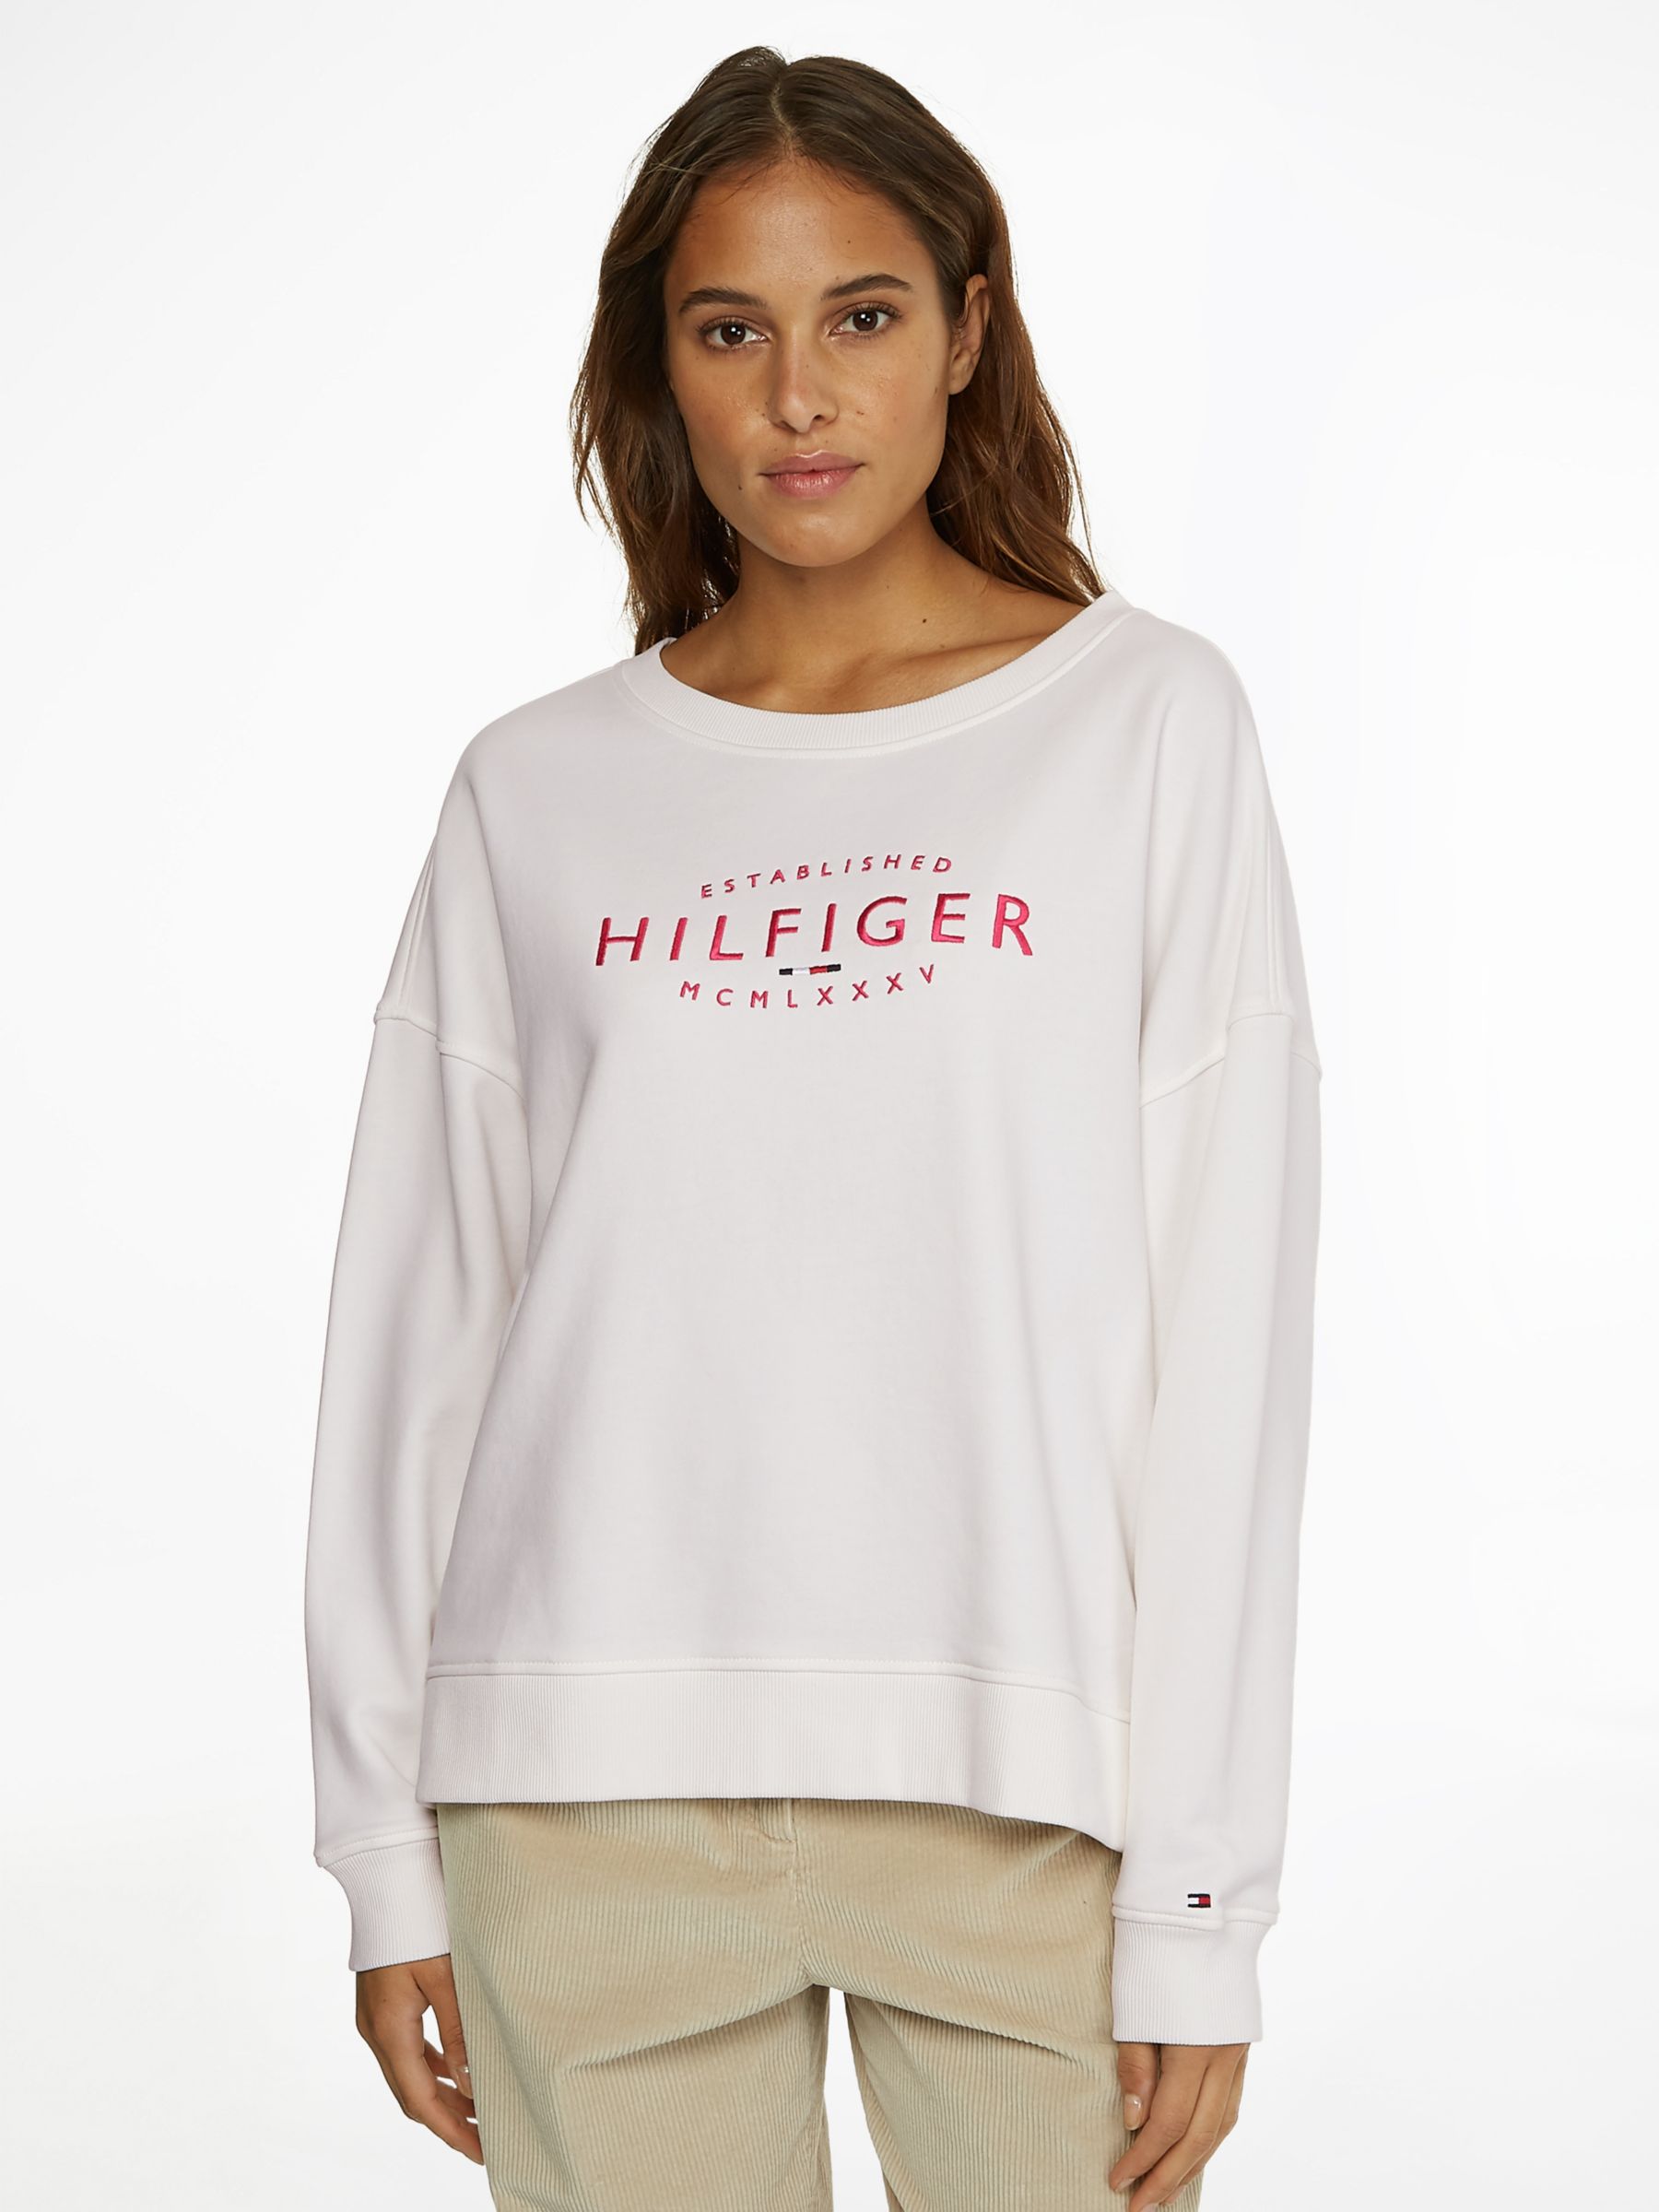 Tommy Hilfiger Embroidered Logo Sweatshirt, Ecru/Multi, XL